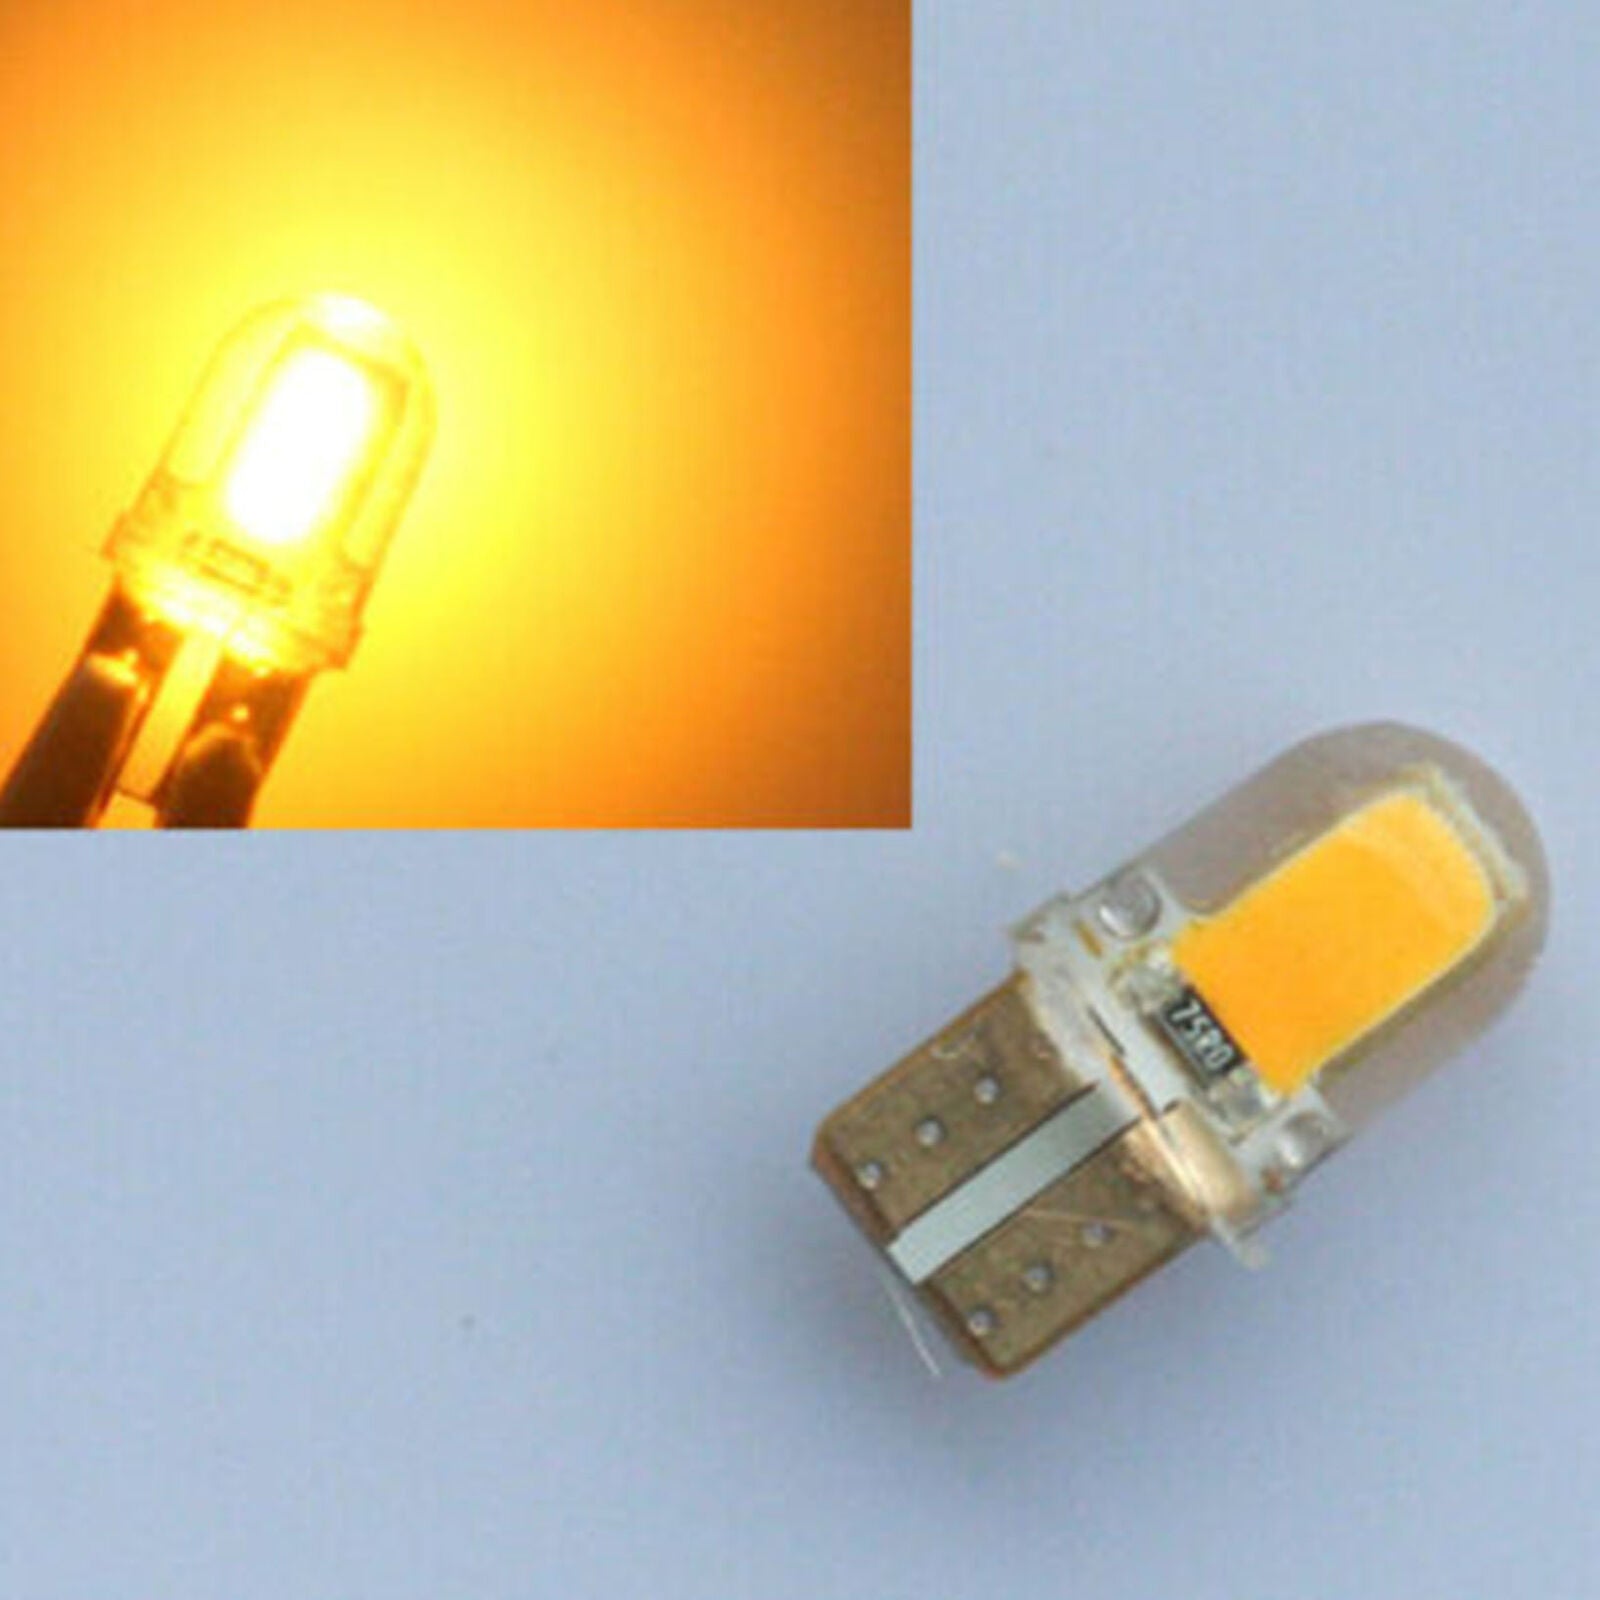 10x yellow LED T10 168 194 COB glass base lamp parking light lighting 12V DC